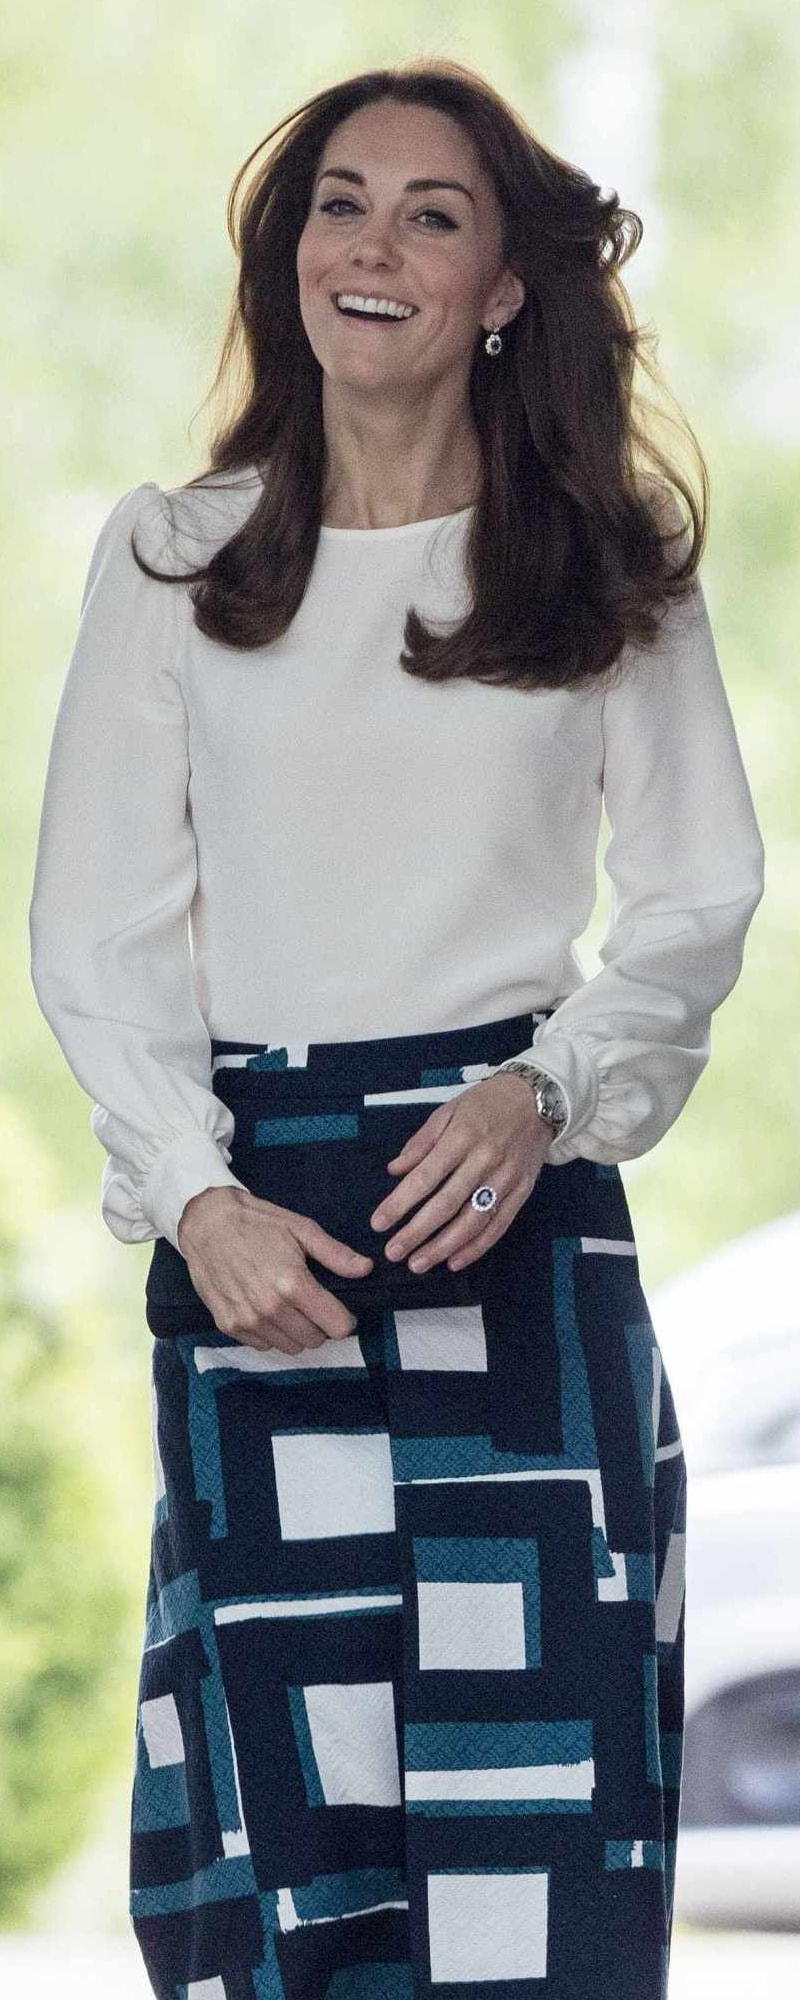 Goat Binky Silk Blouse as seen on Kate Middleton, The Duchess of Cambridge.